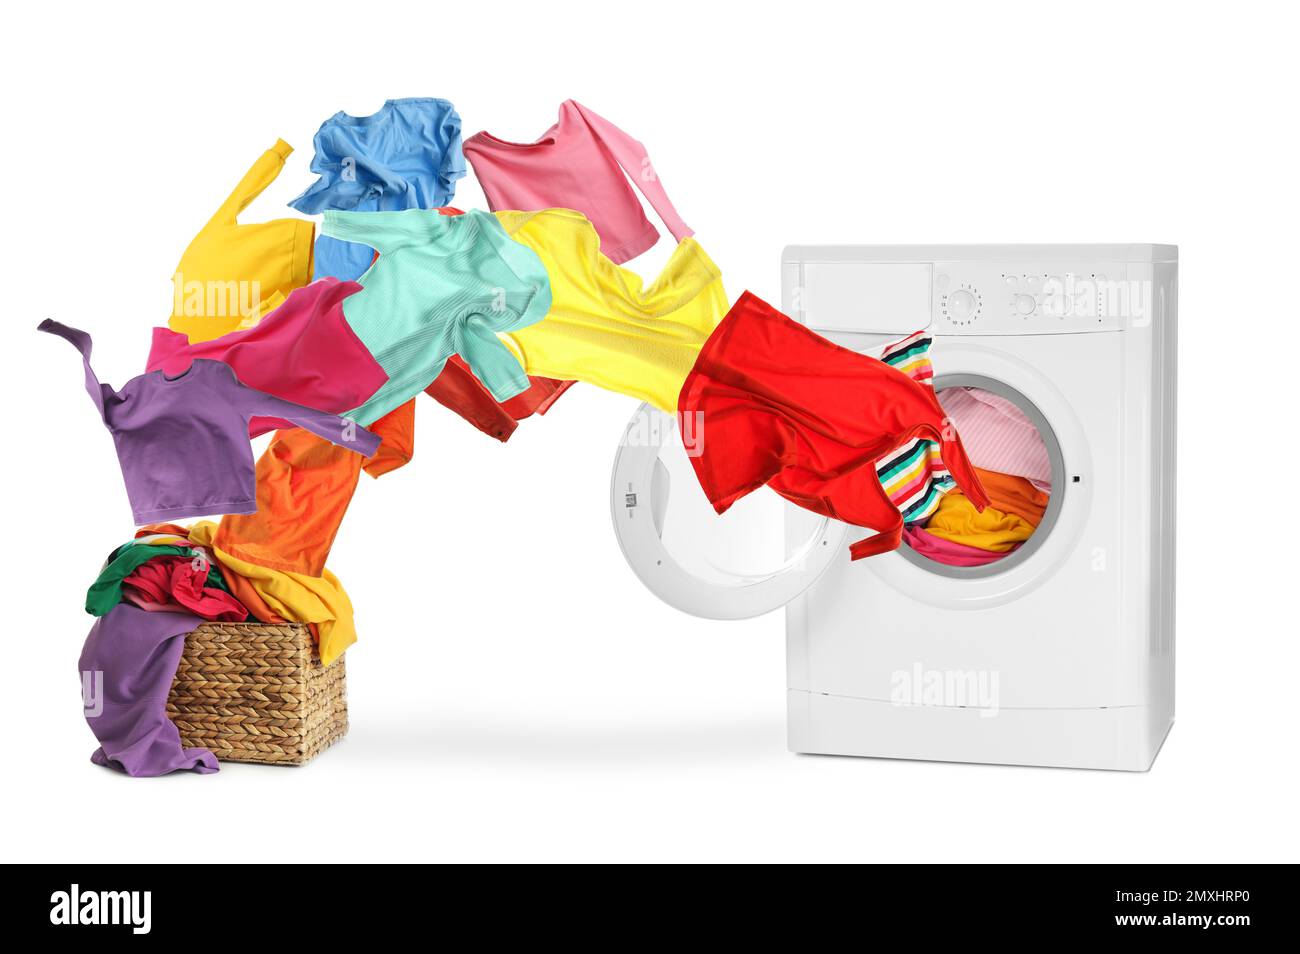 Washing machine and flying clothes on white background Stock Photo - Alamy